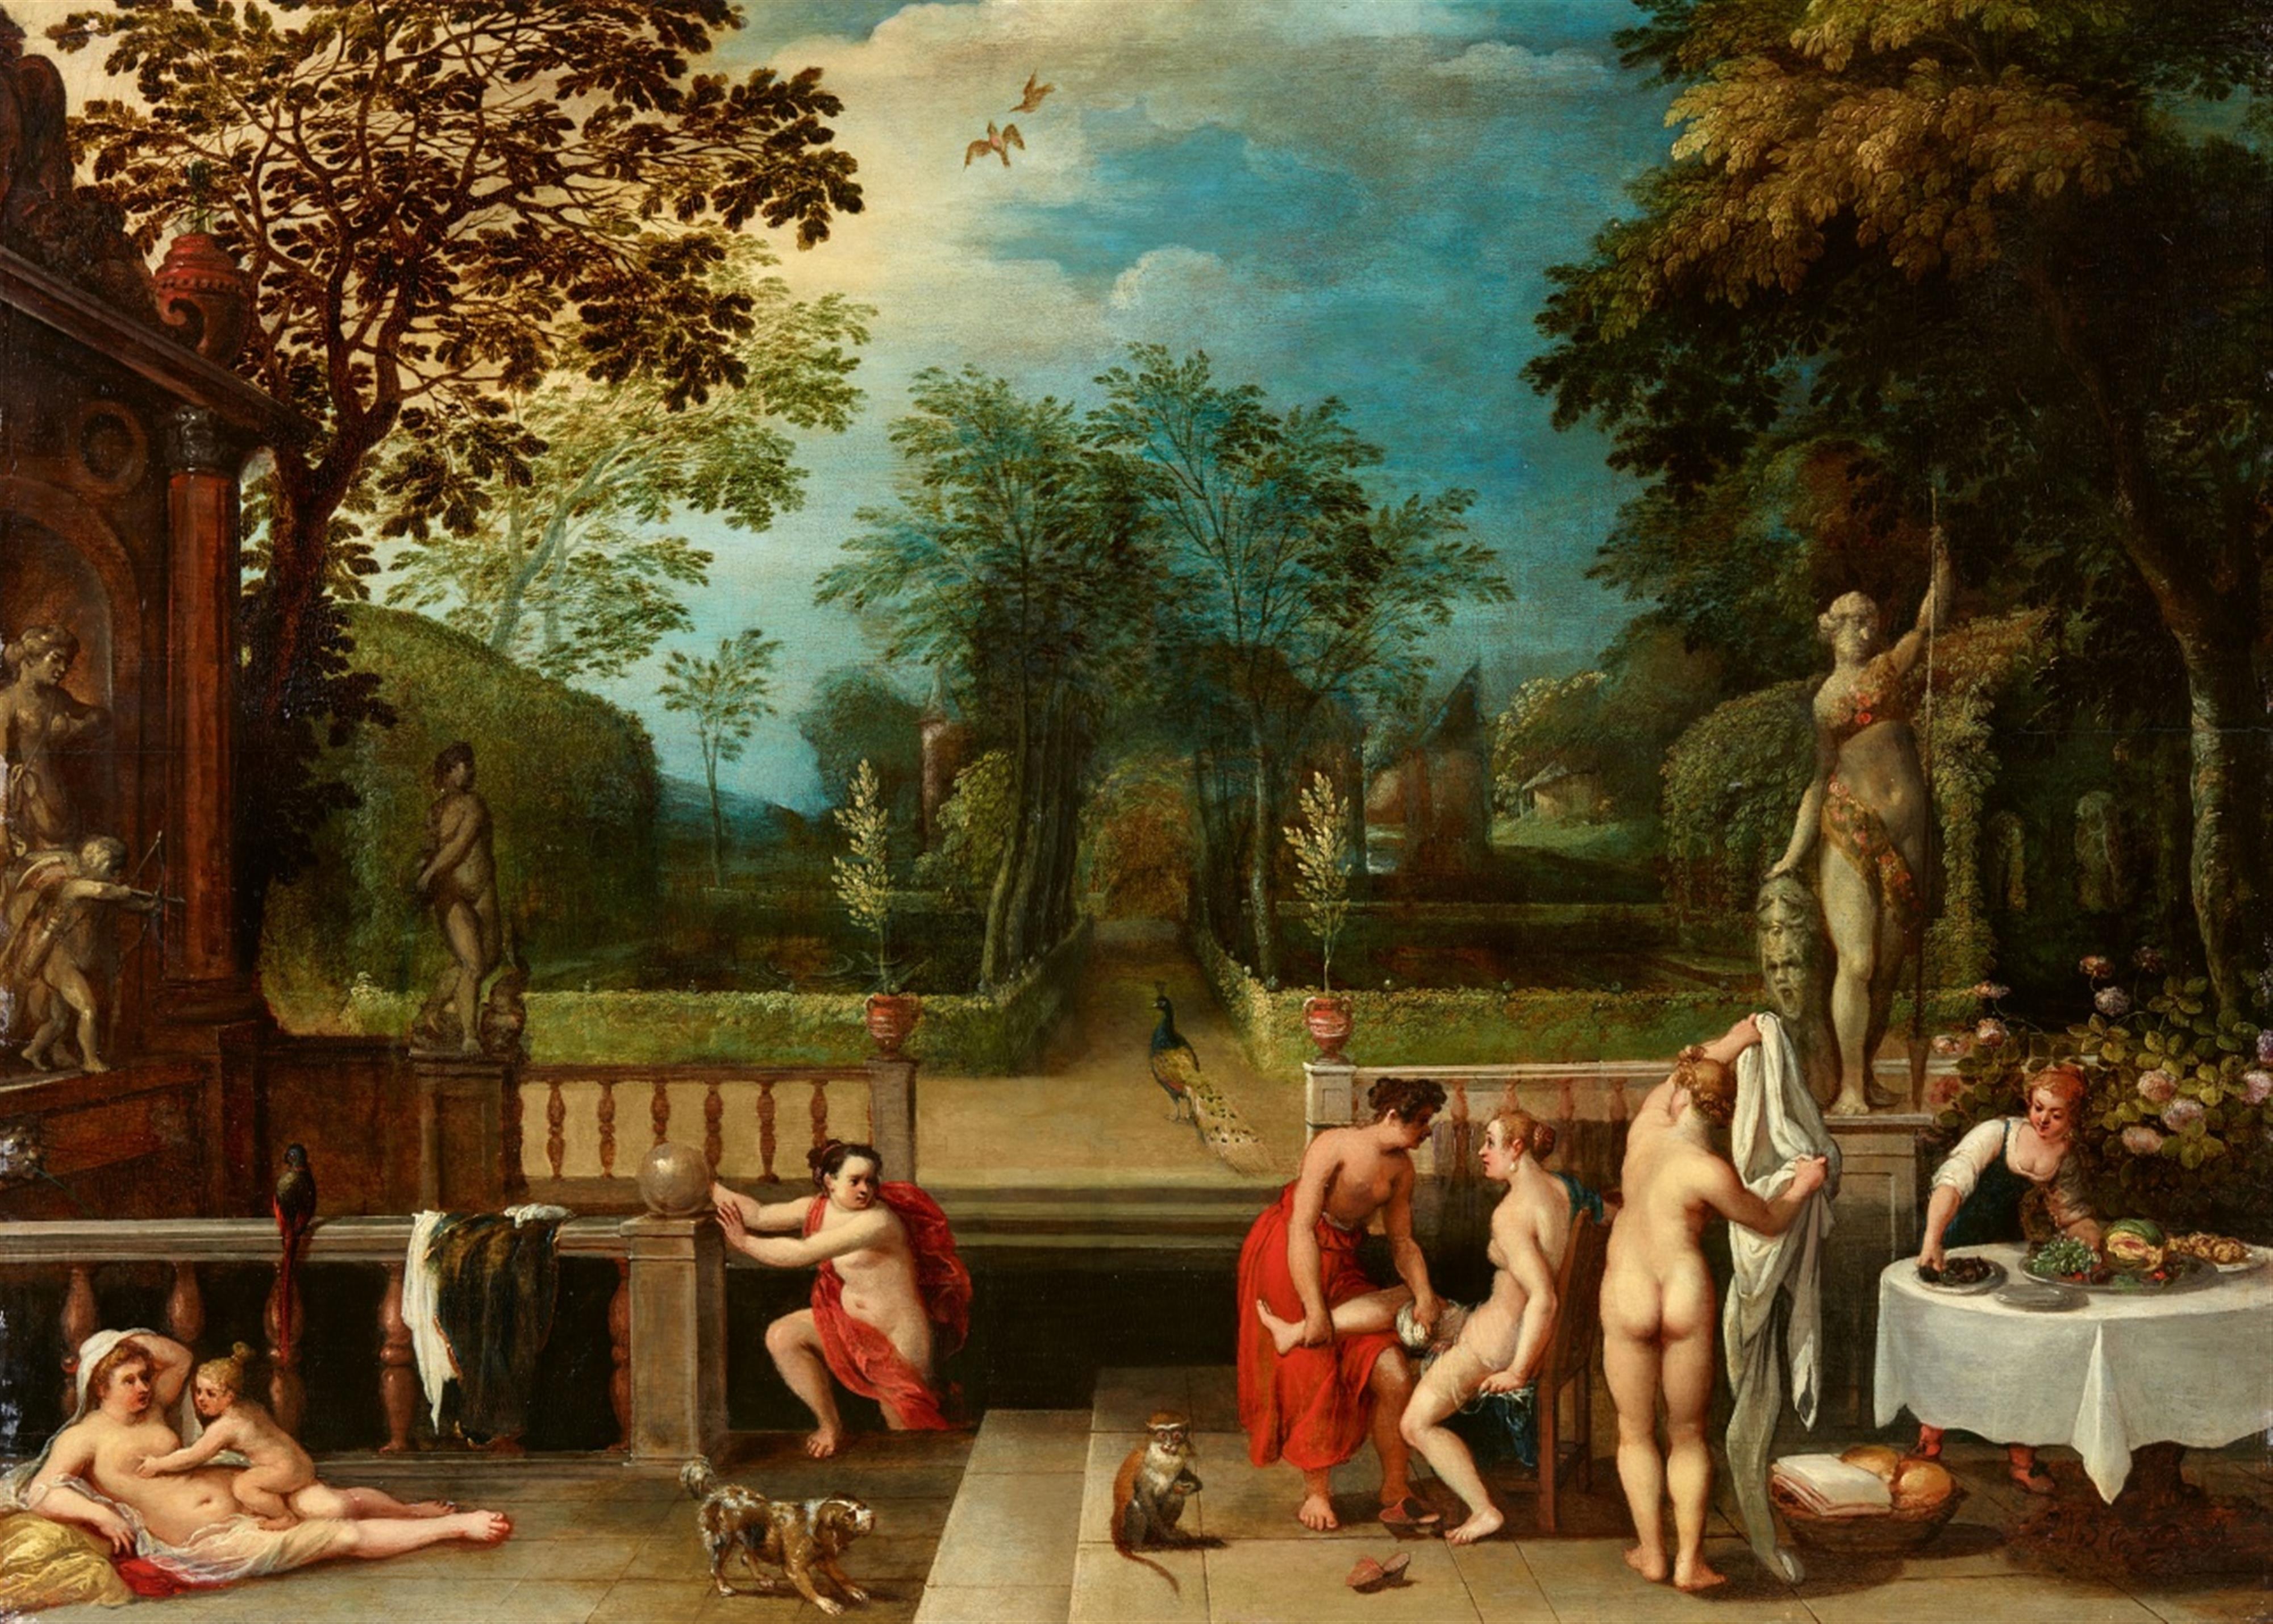 Adriaen van Stalbemt - Bathing Nymphs in a Park Landscape - image-1